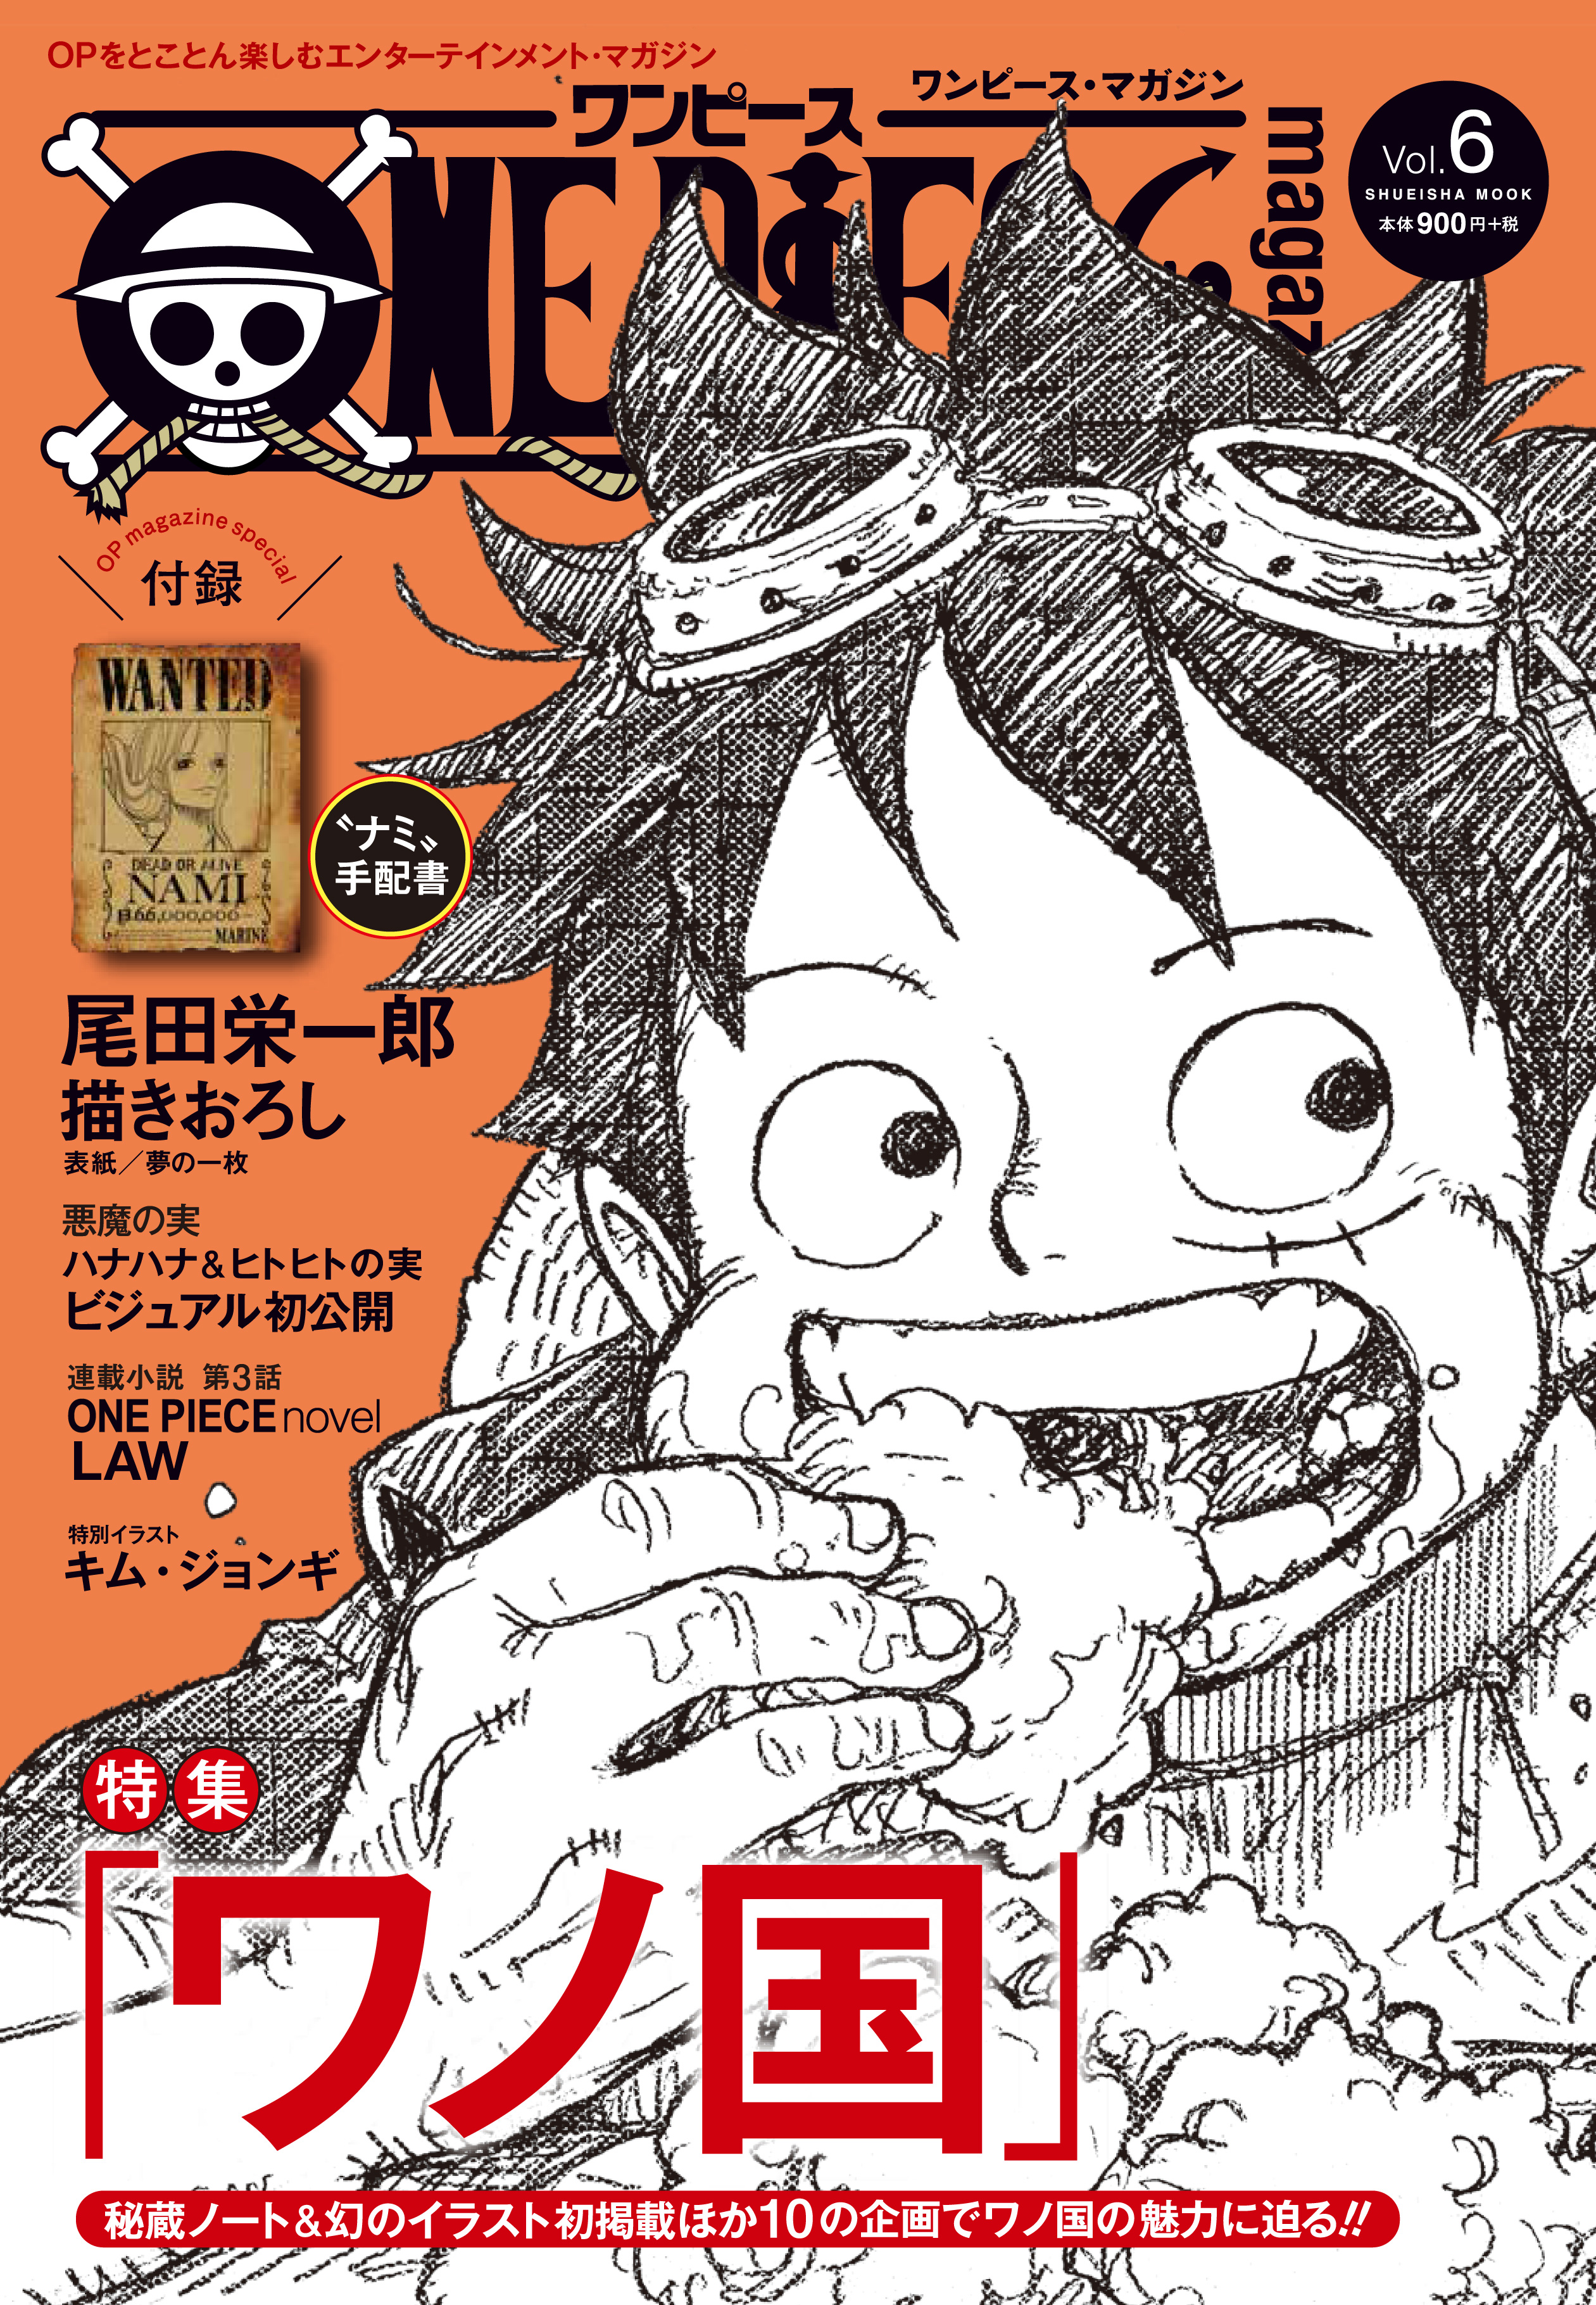 Greeeen 公式ブログ One Piece Magazine Vol 6 5 24発売 にgreeeenのインタビュー記事が掲載 Powered By Line